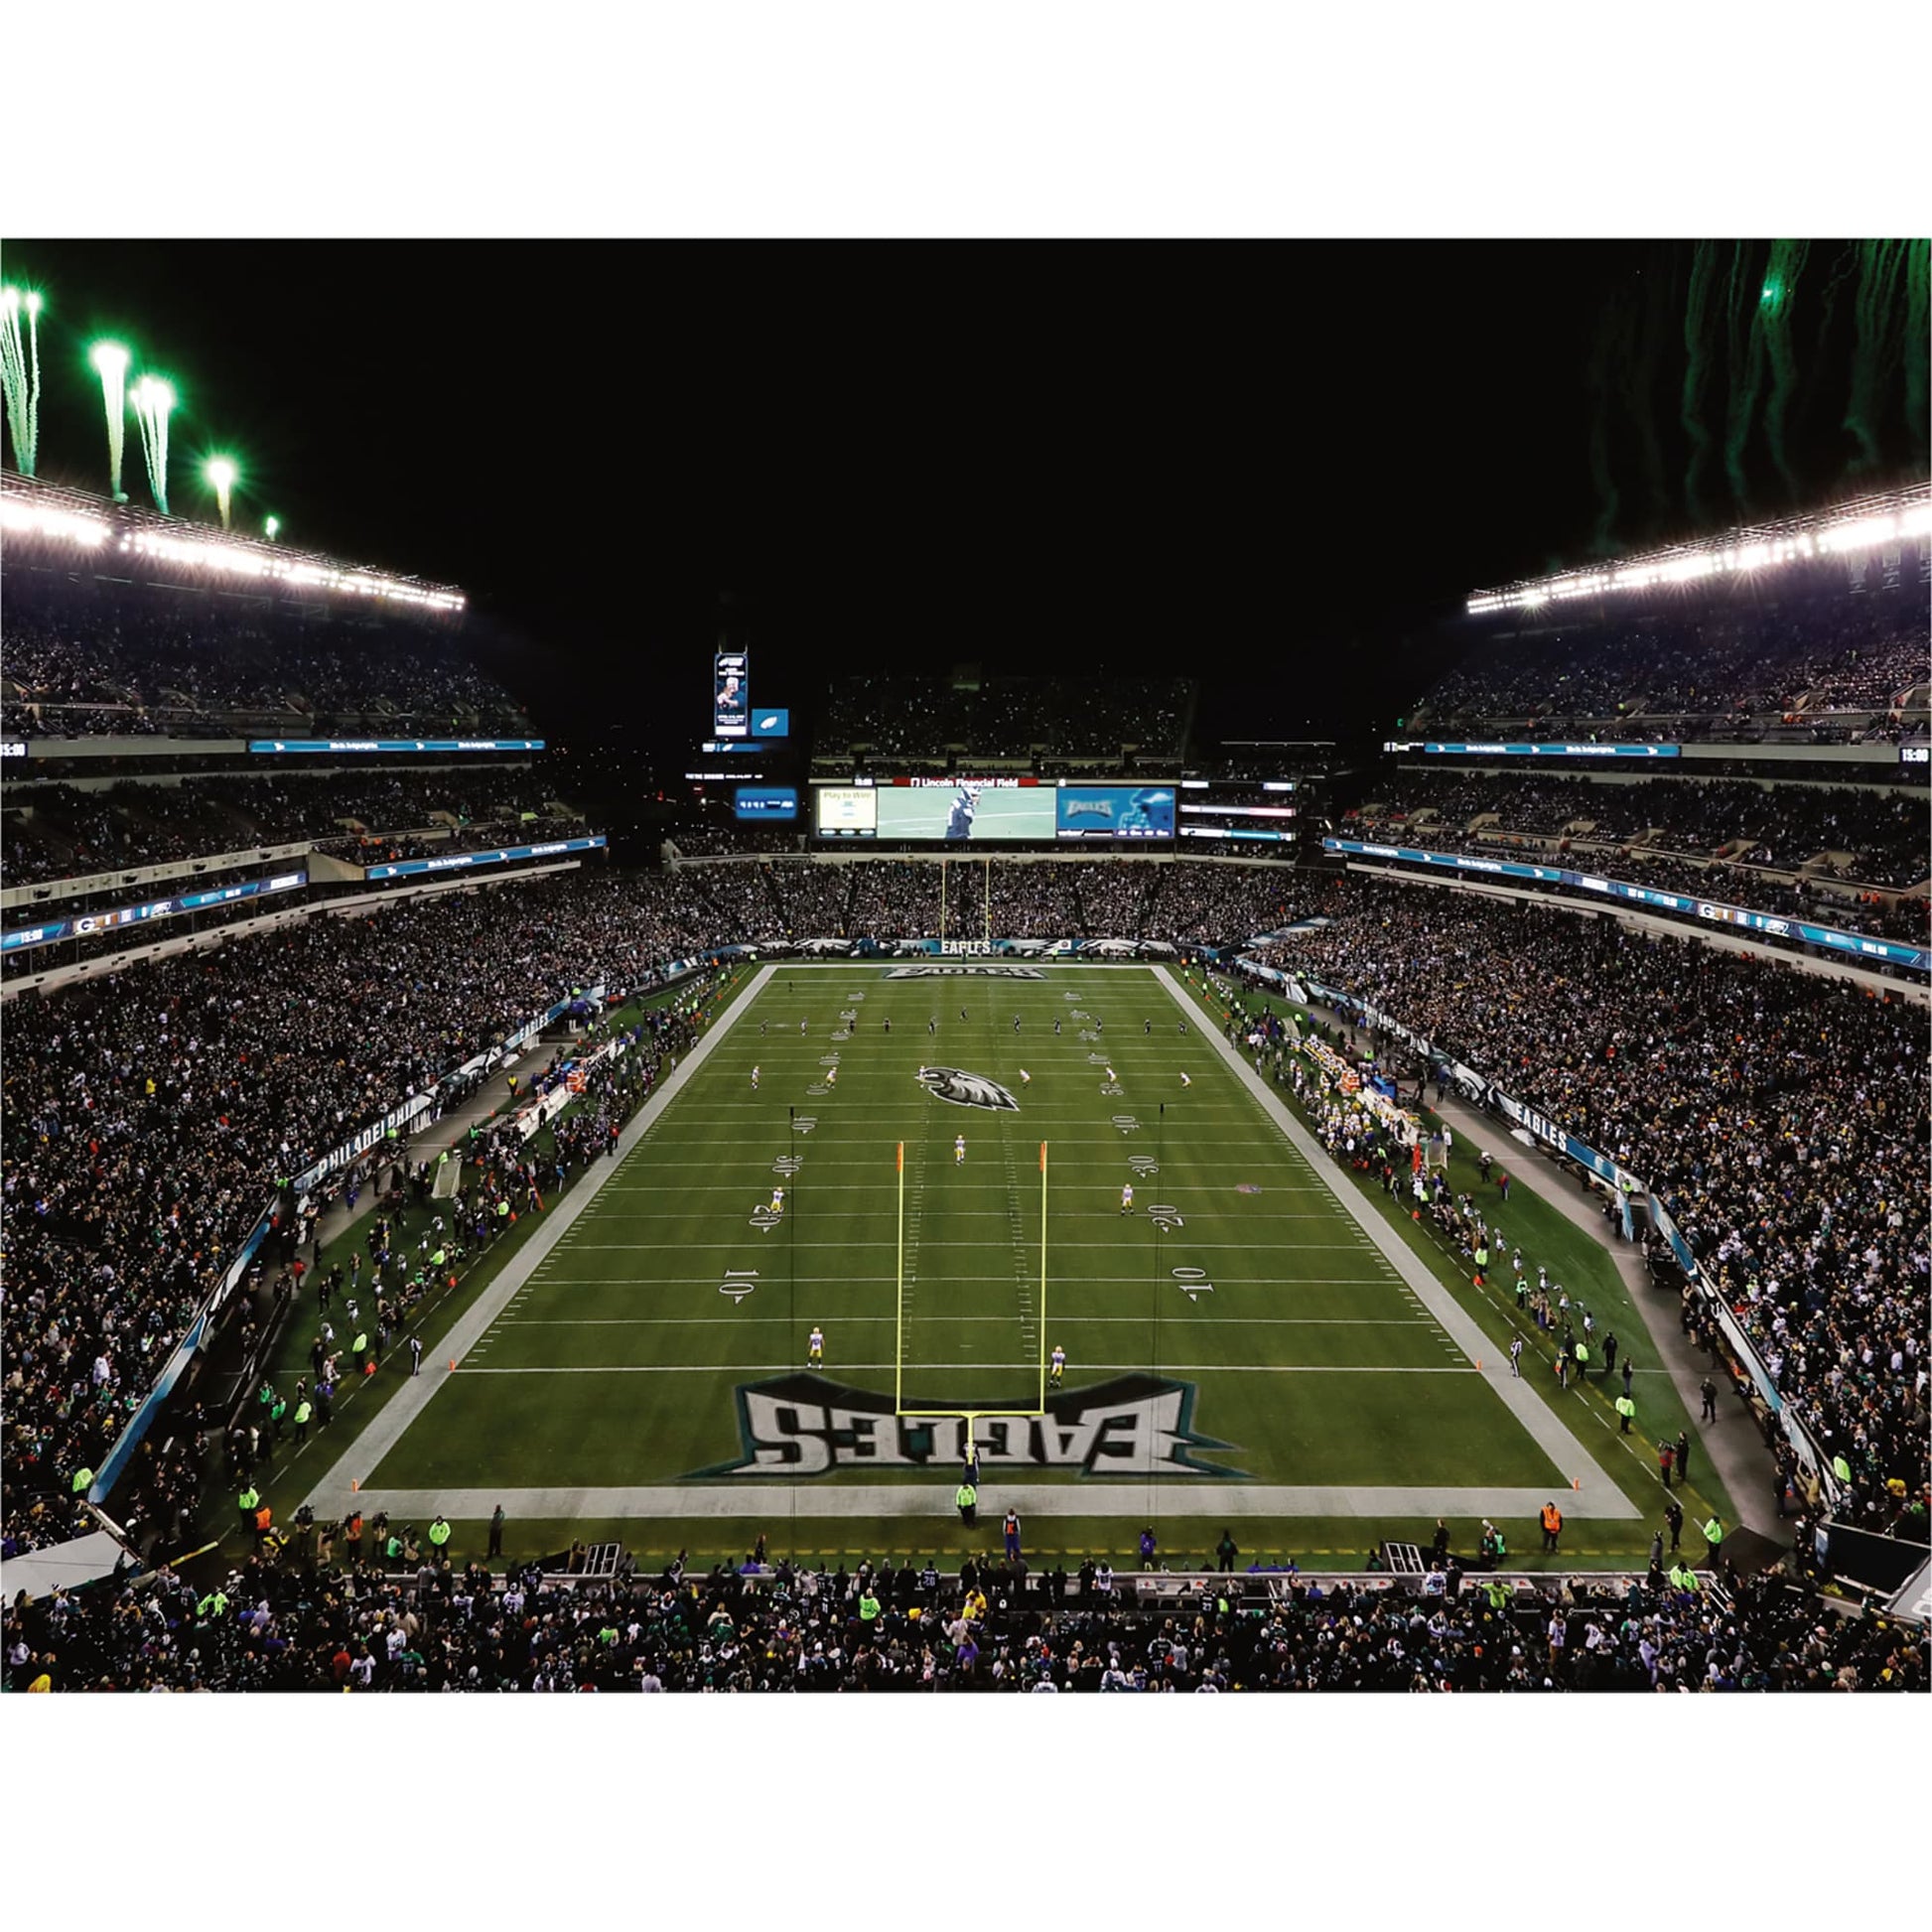 Home Field: The Philadelphia Eagles' Lincoln Financial Field